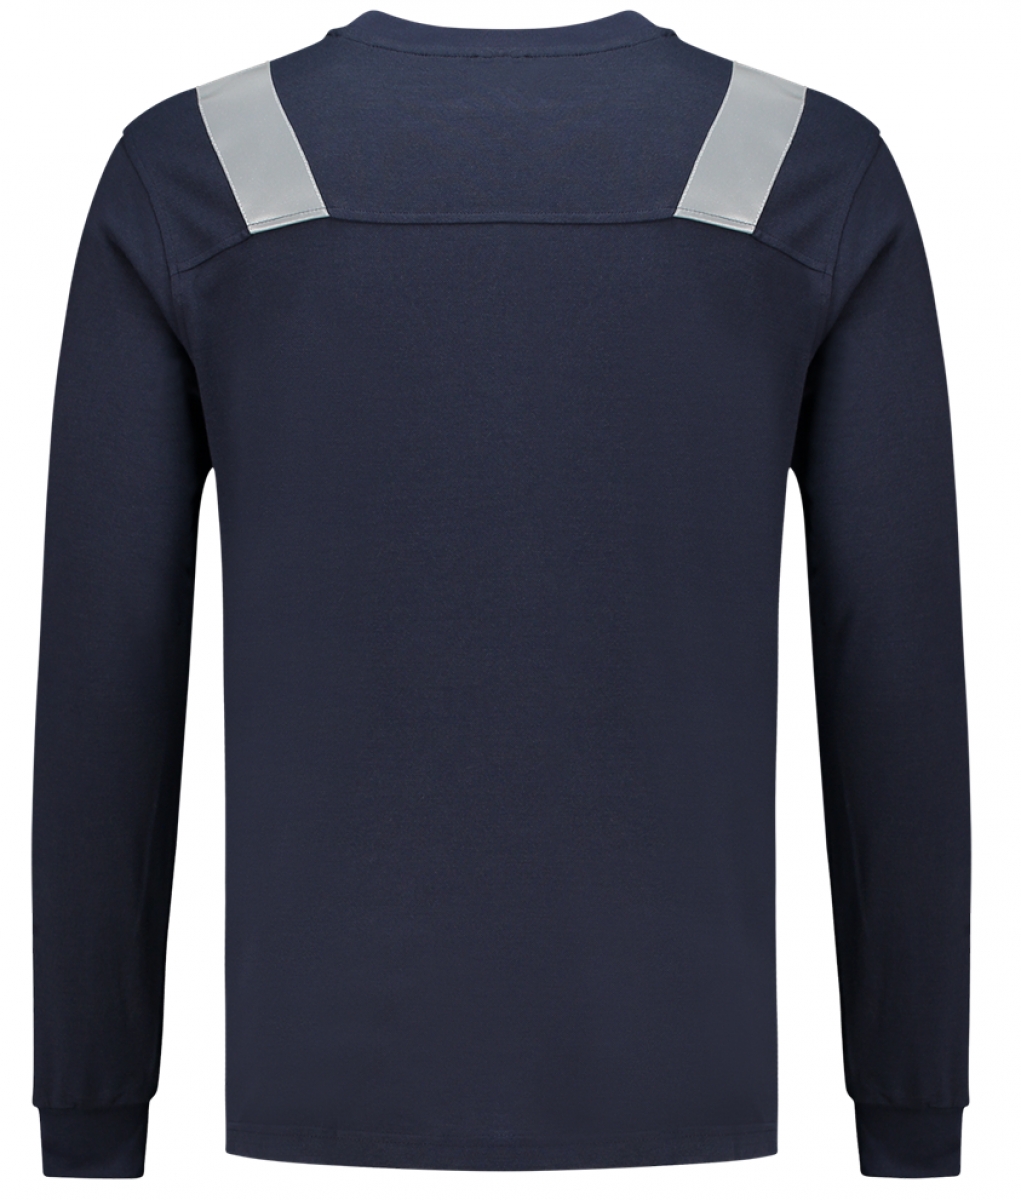 TRICORP-Worker-Shirts, T-Shirt, Mulitnorm, langarm, 200 g/m, dunkelblau